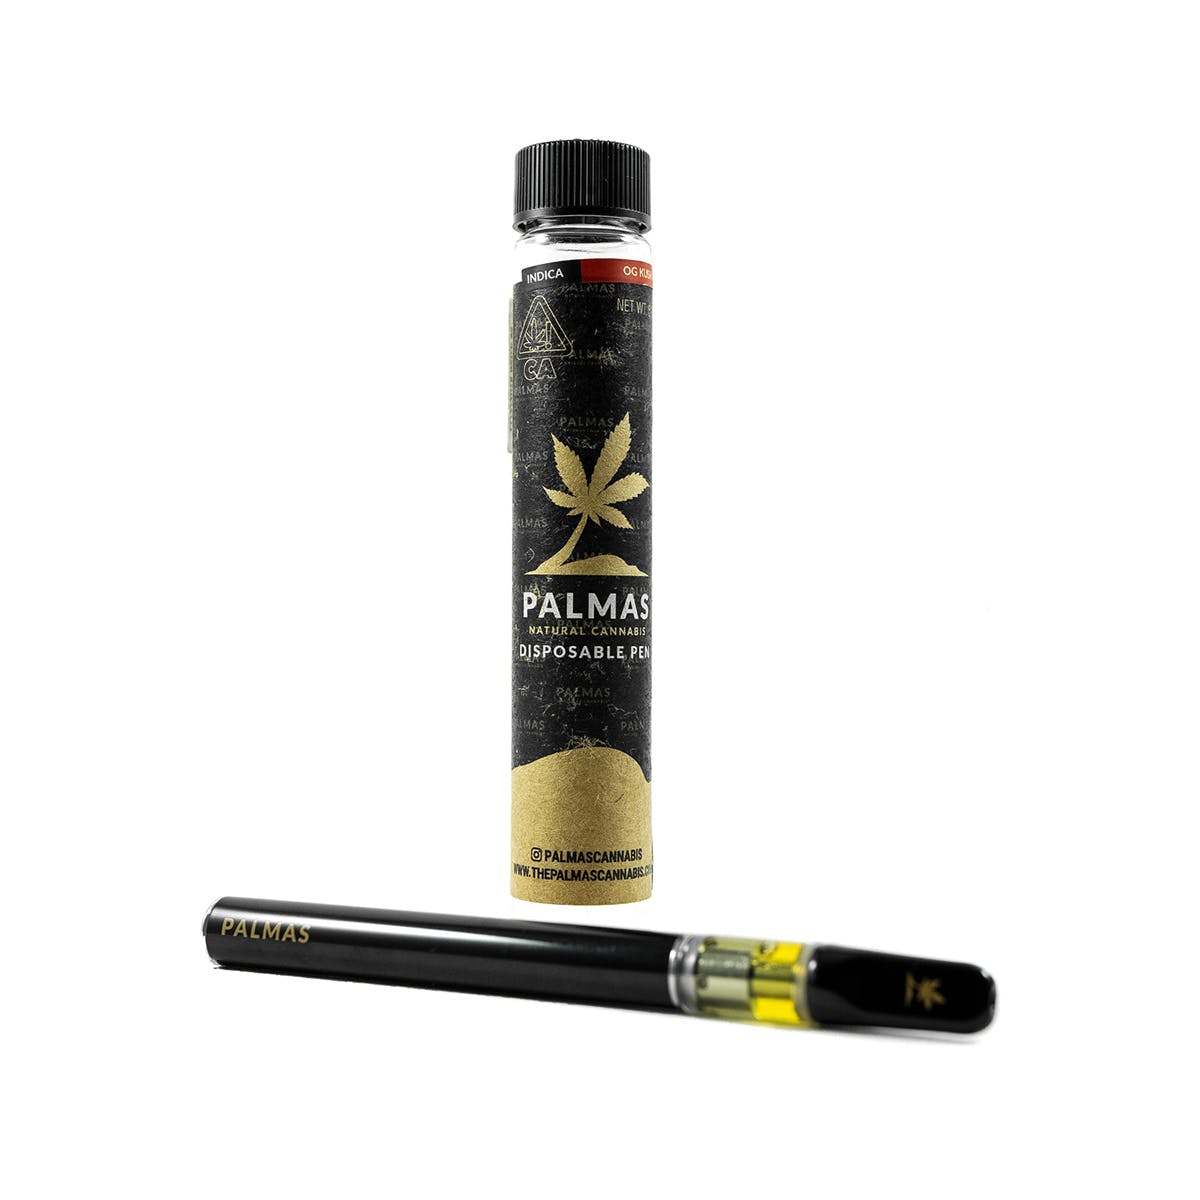 marijuana-dispensaries-gold-20-cap-collective-in-los-angeles-palmas-disposable-og-kush-500mg